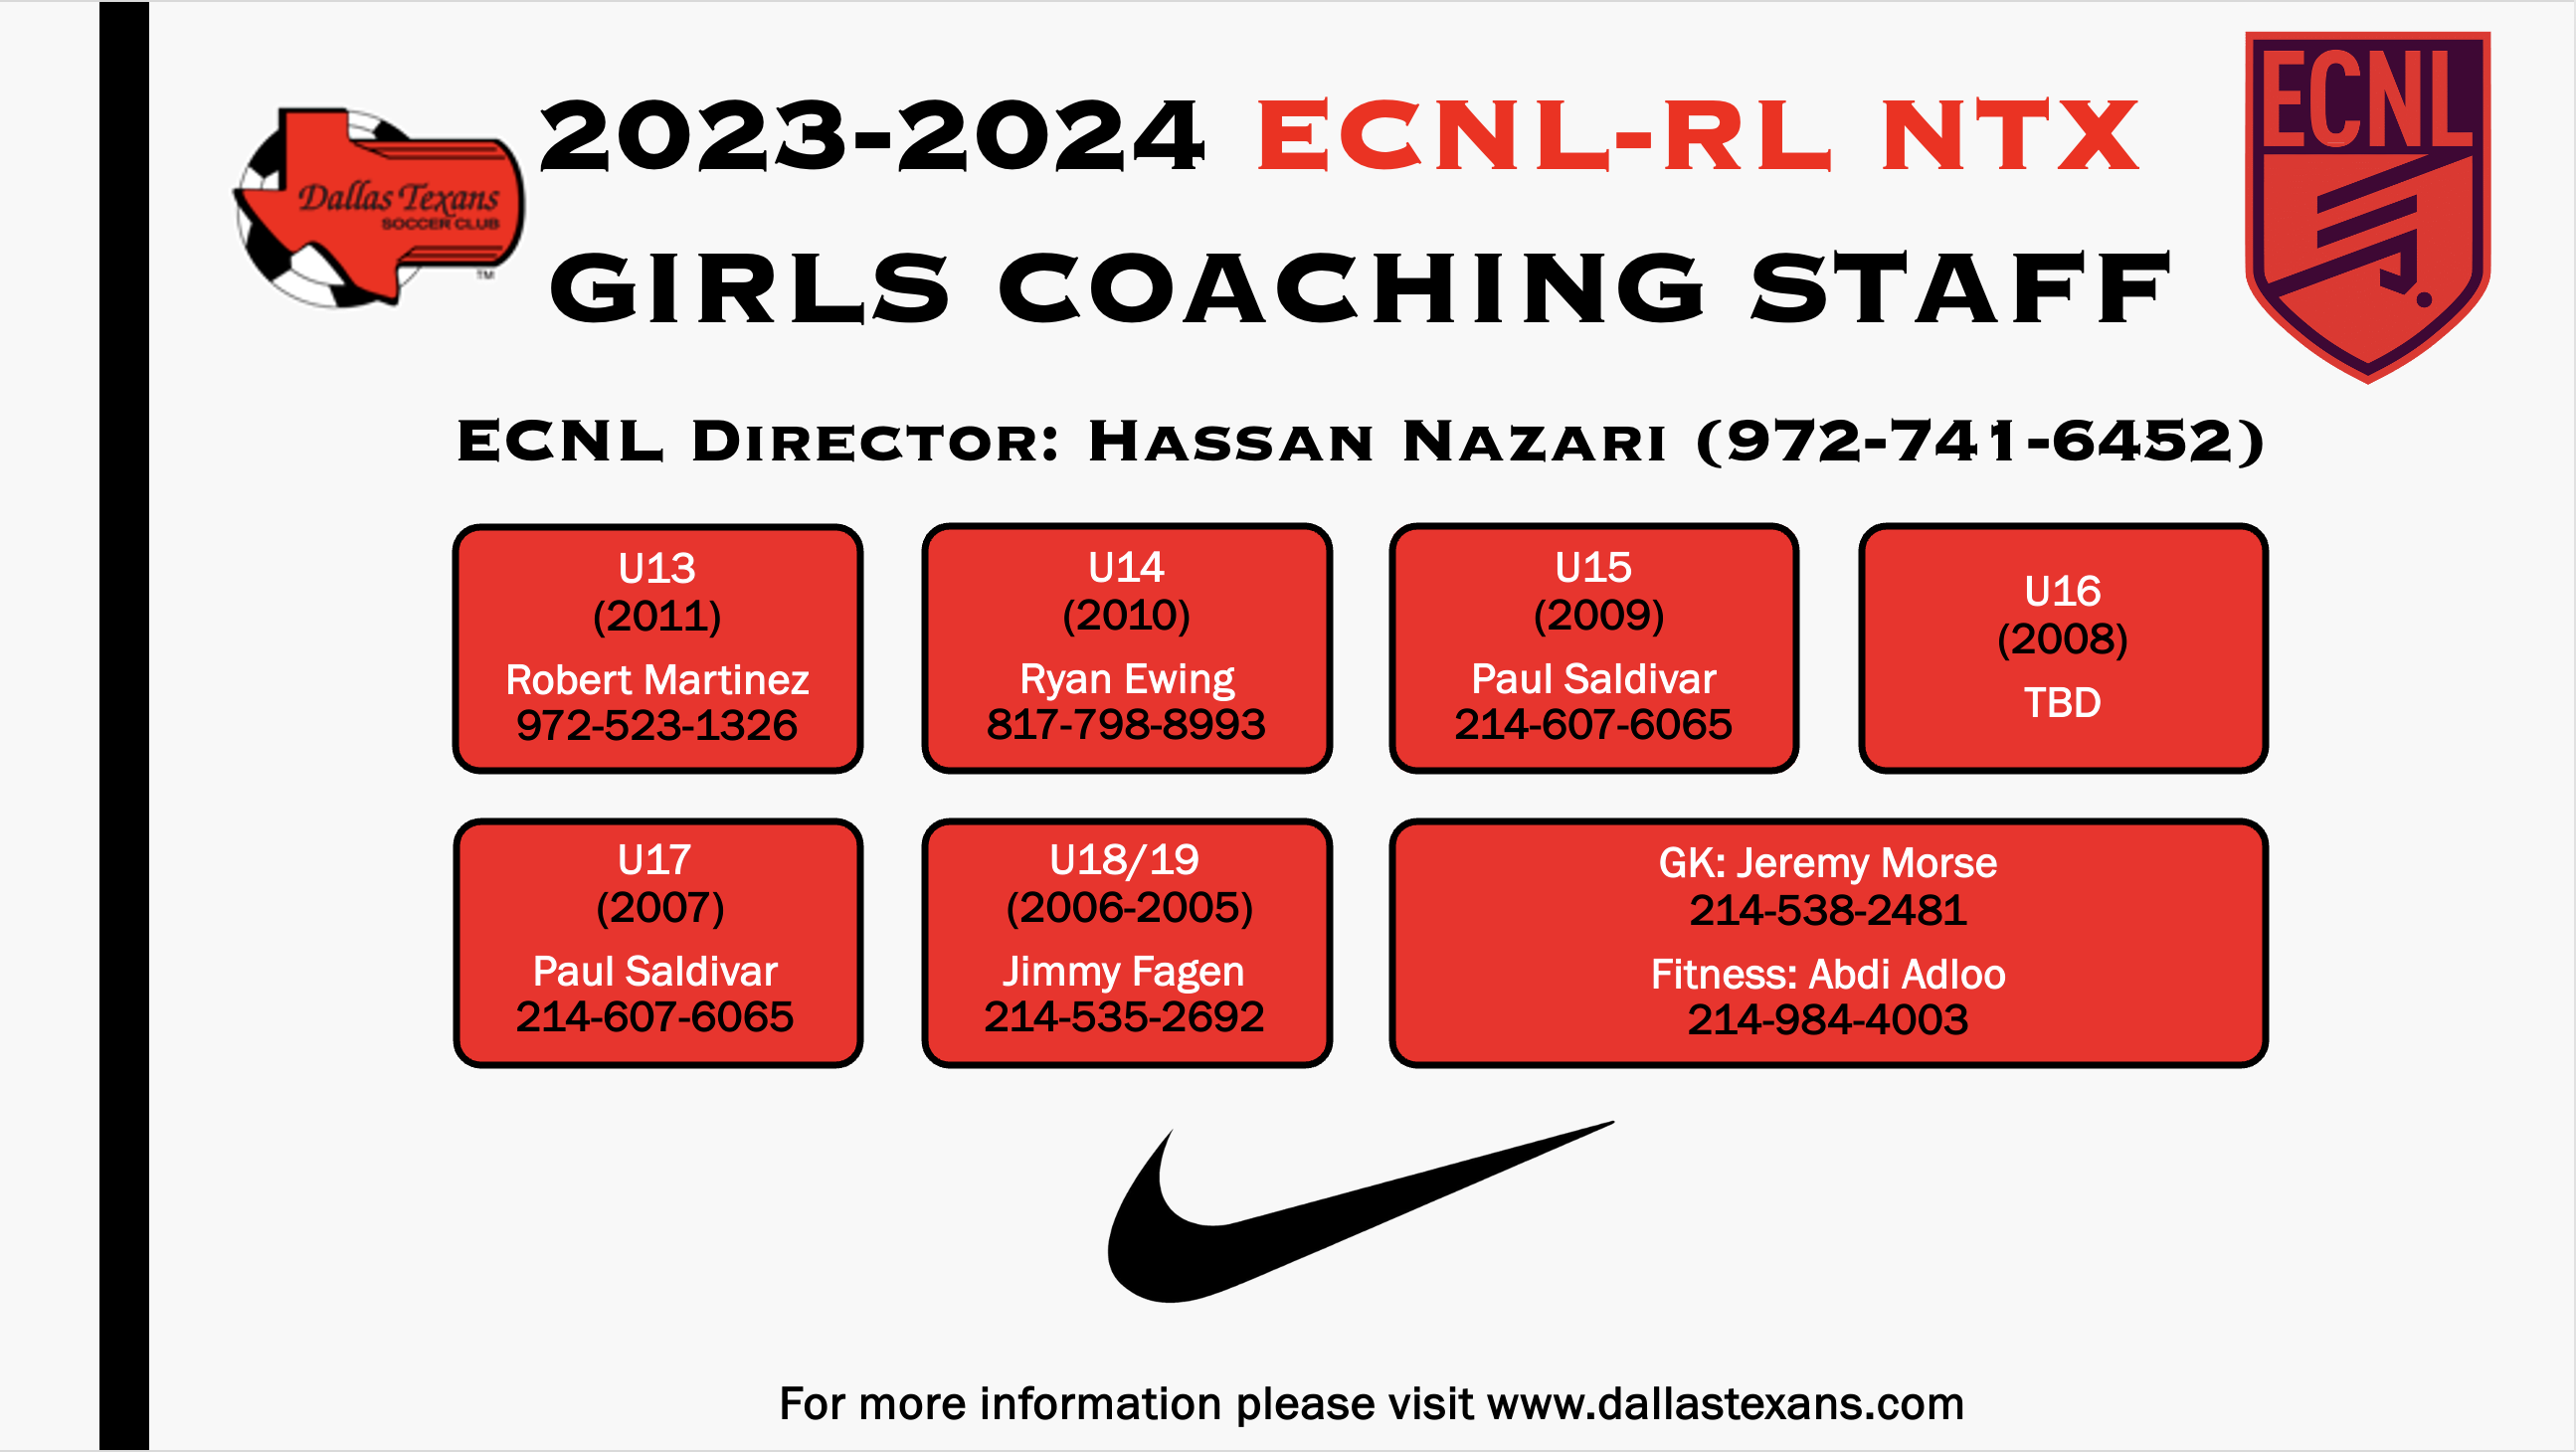 ECNL-RL NTX Girls